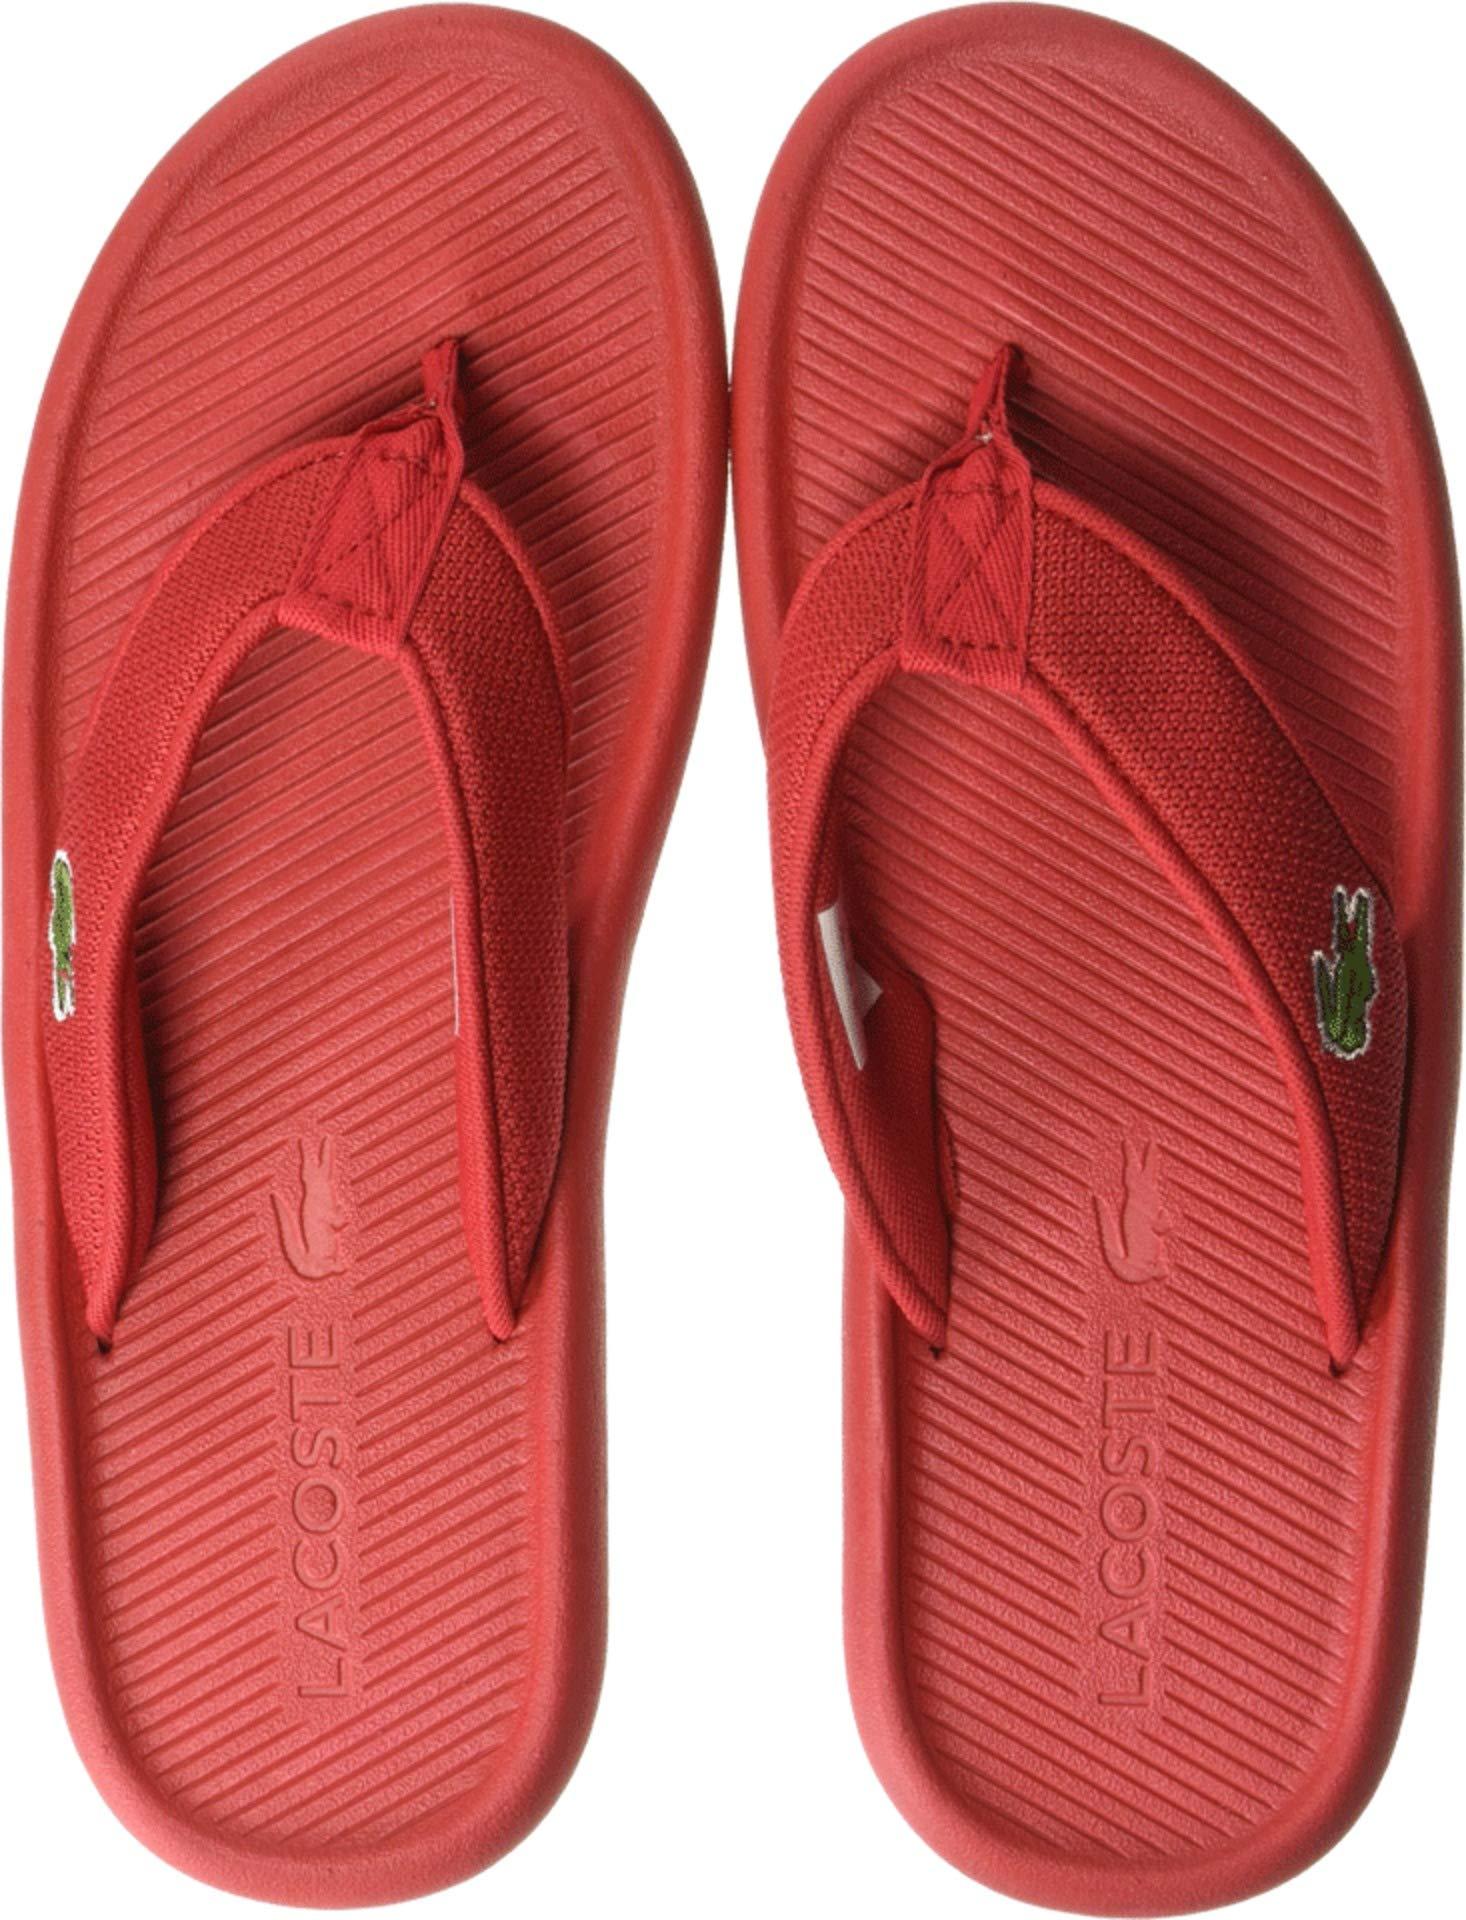 Croco Sandal 219 2 Cma 